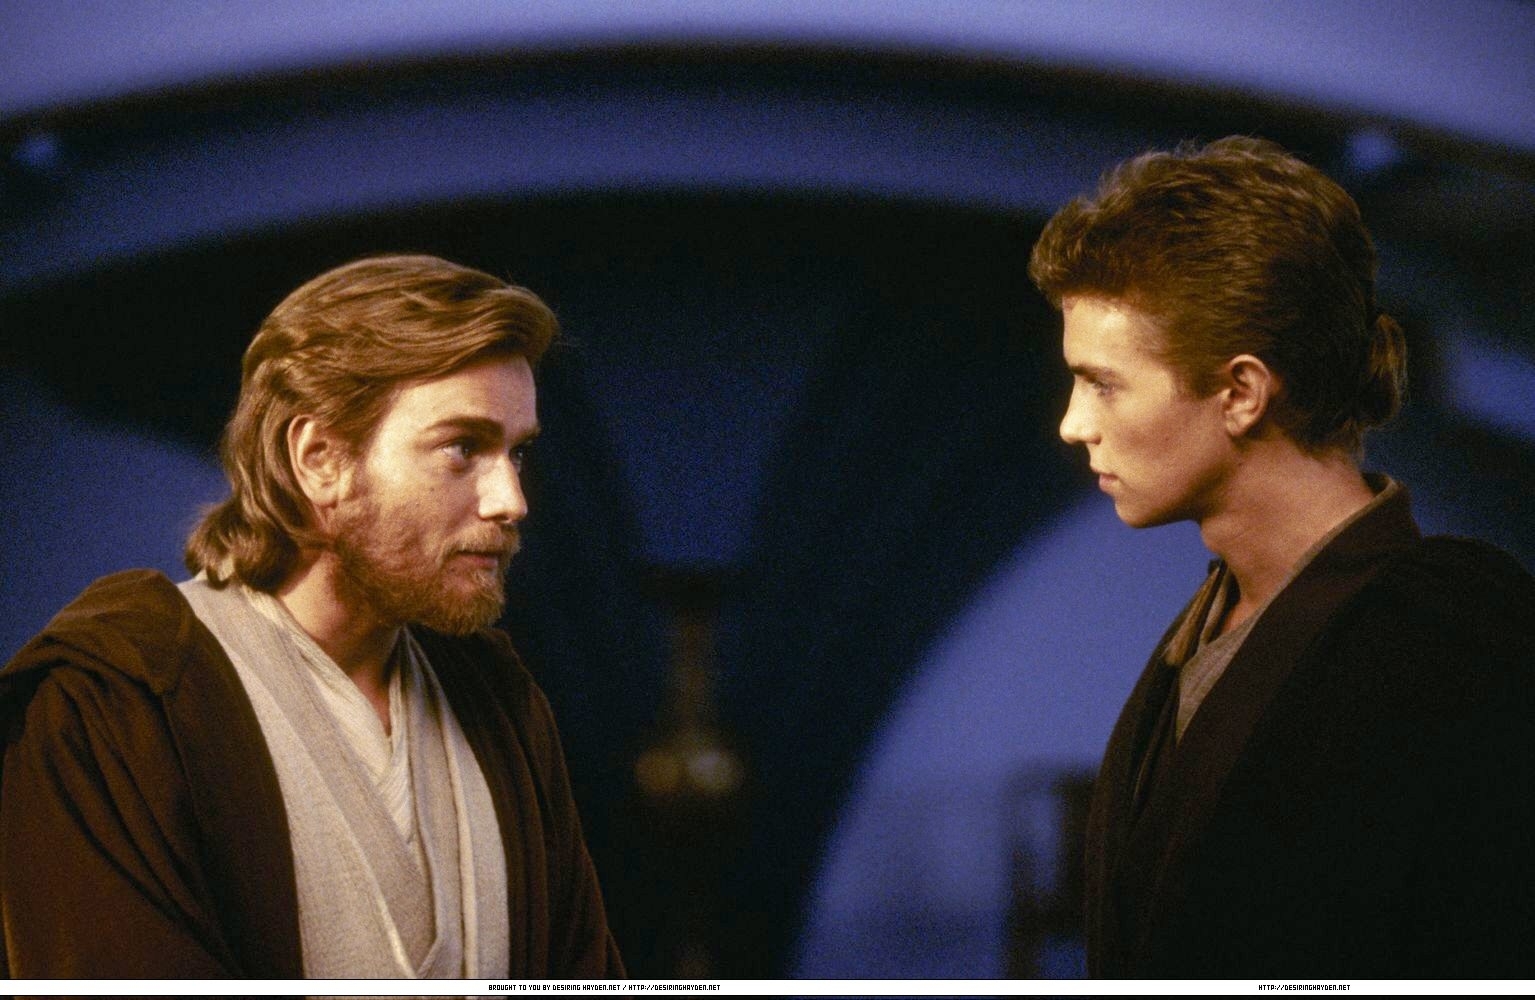 obi-wan kenobi and Anakin skywalker 